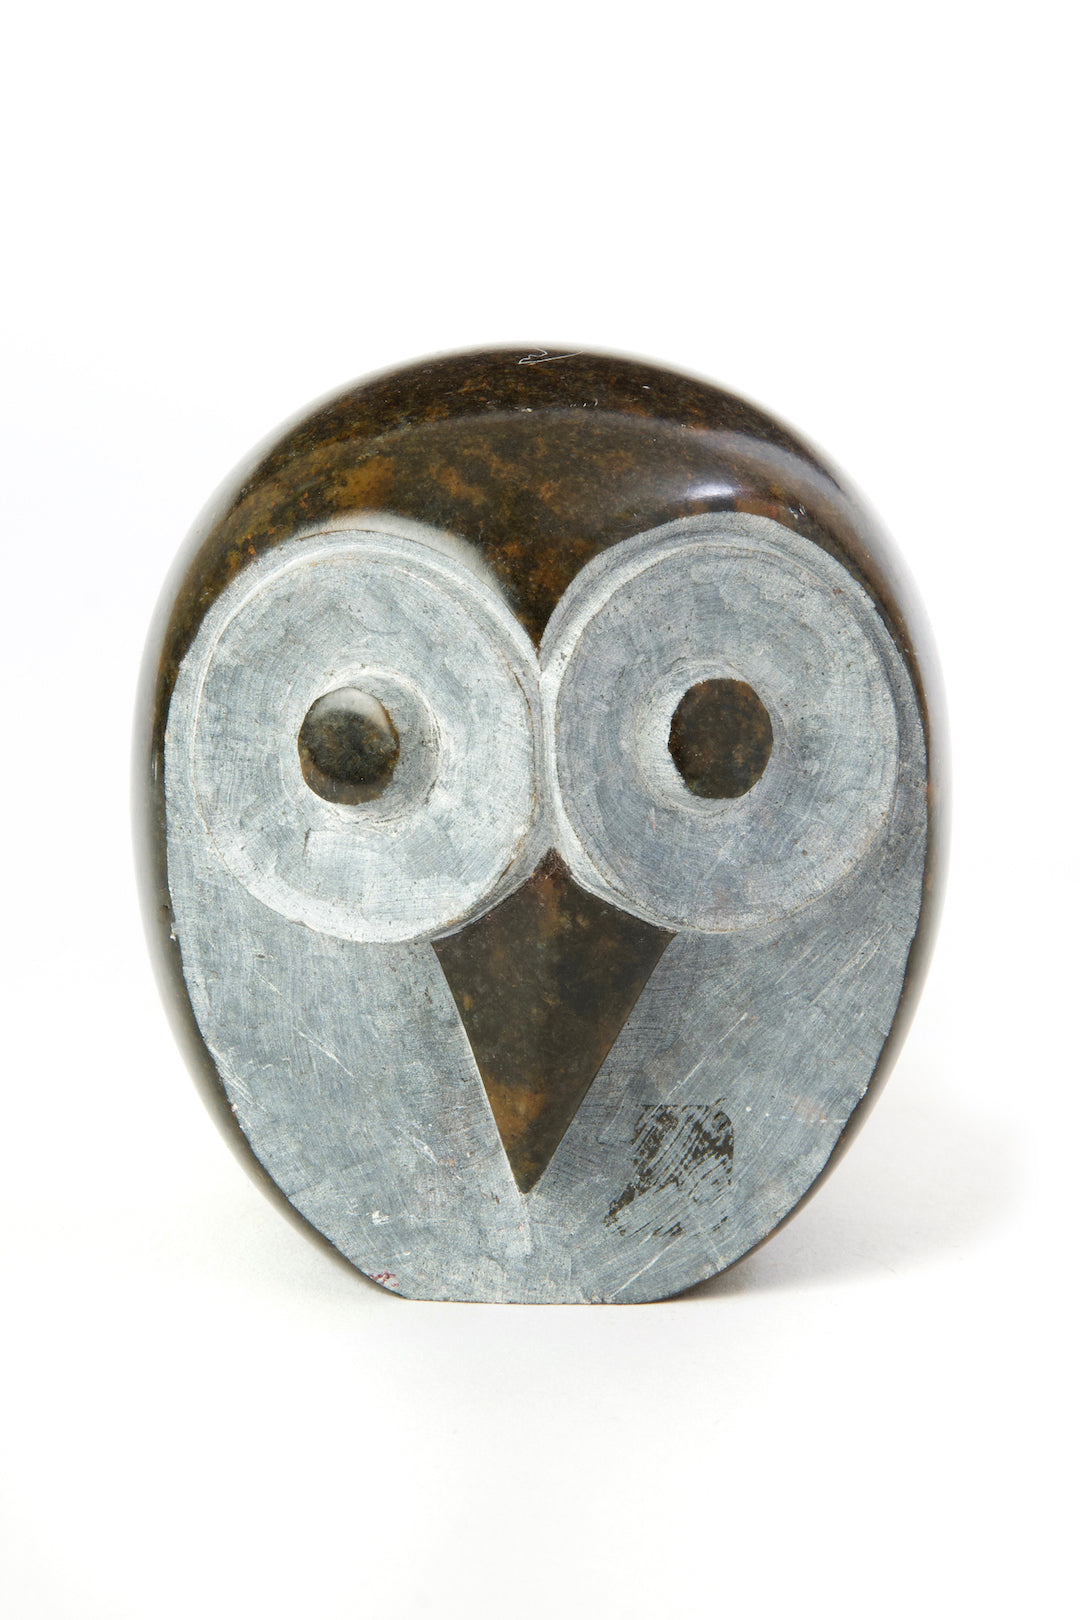 Serpentine Stone Owl Sculpture from Zimbabwe Small Serpentine Stone Owl Sculpture from Zimbabwe